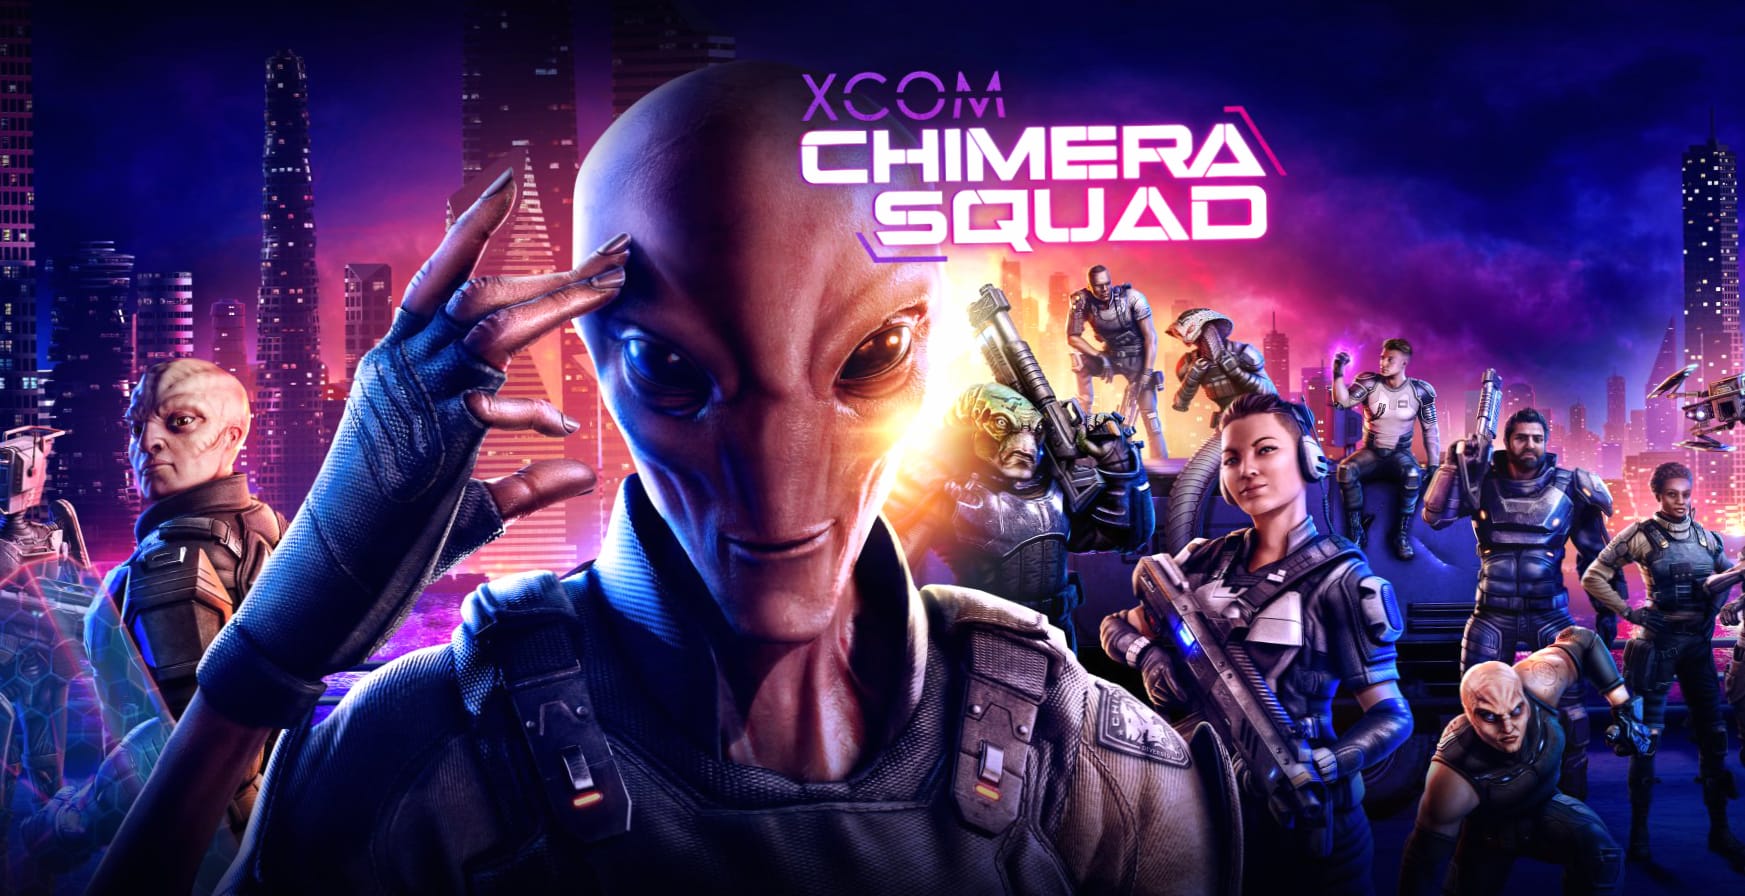 XCOM Chimera Squad at 640 x 960 iPhone 4 size wallpapers HD quality